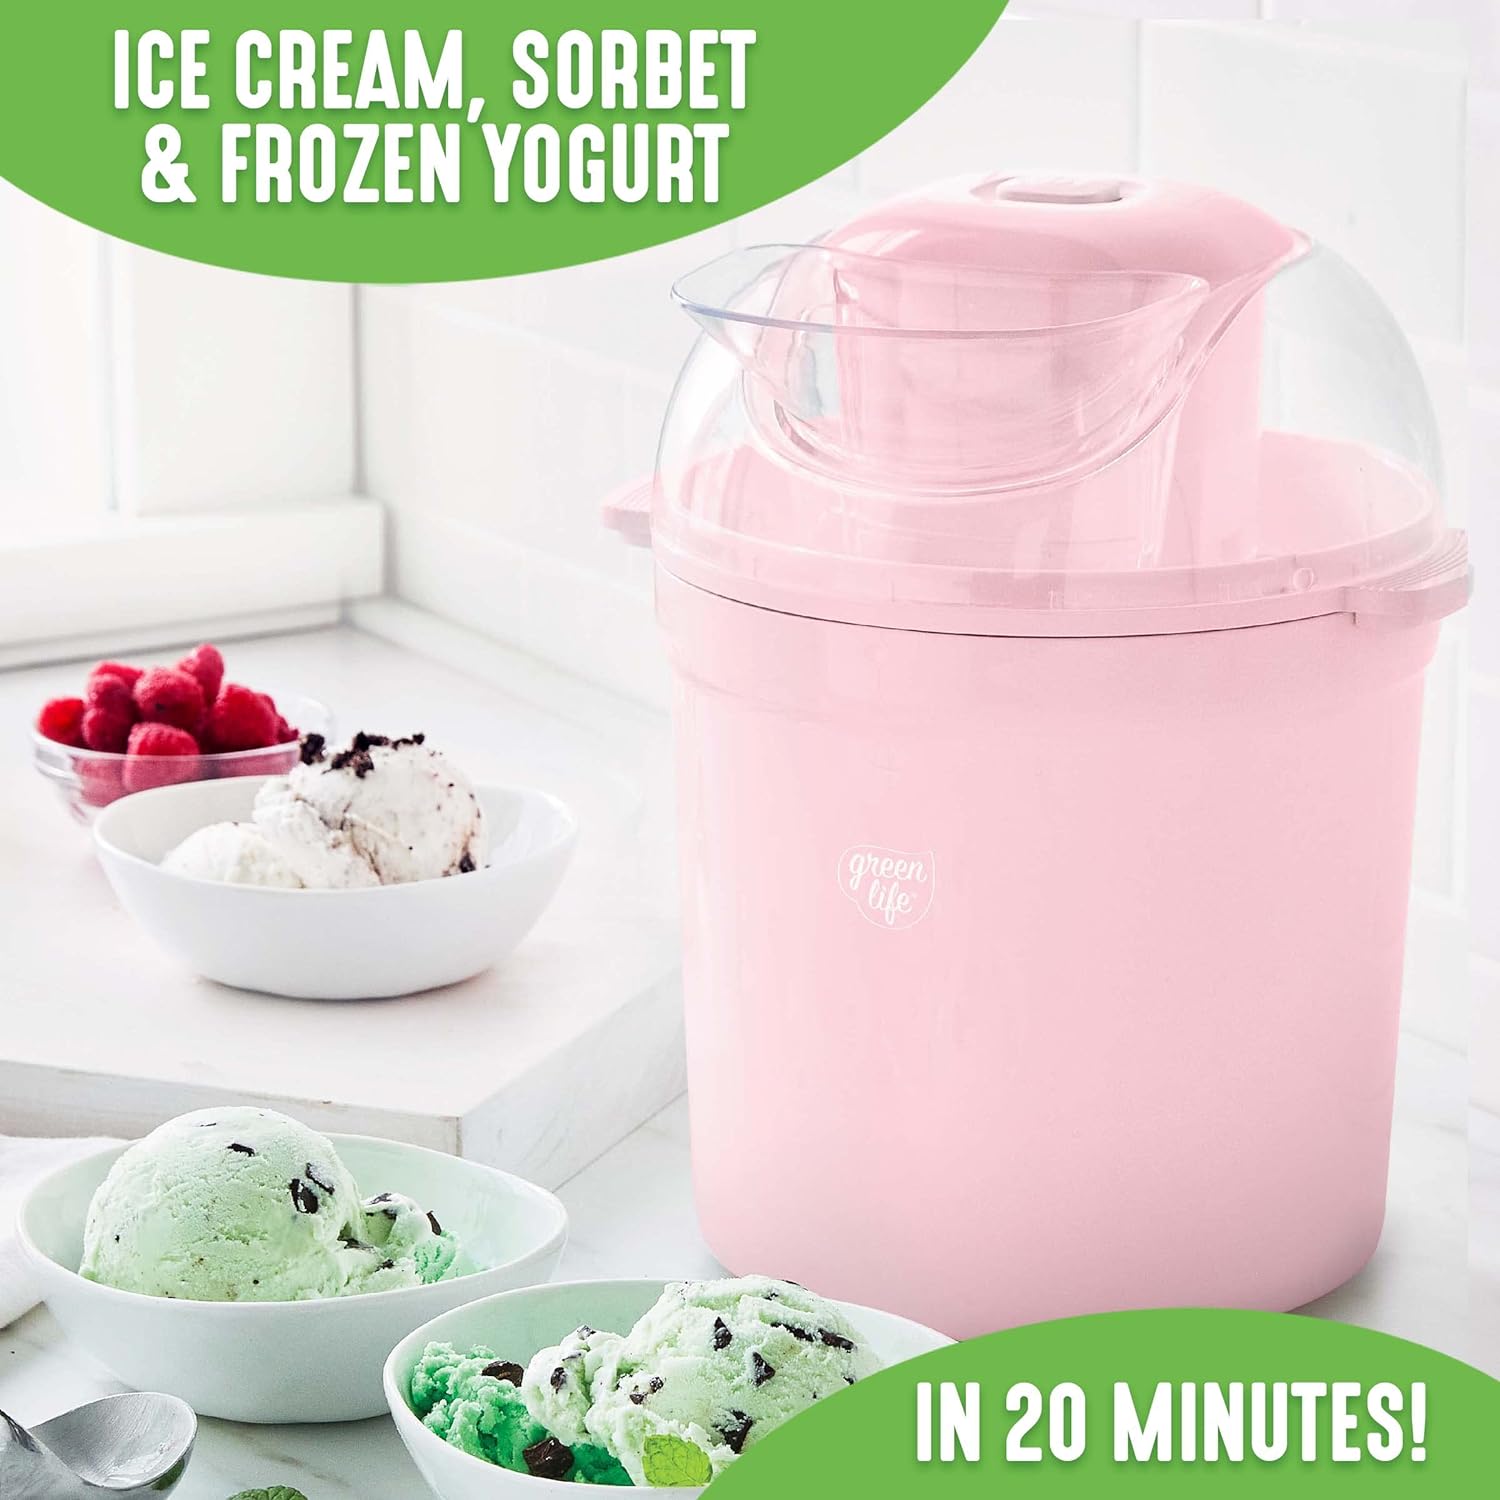 GreenLife Healthy Ceramic Nonstick 1.5QT Express Ice Cream Maker, Pink